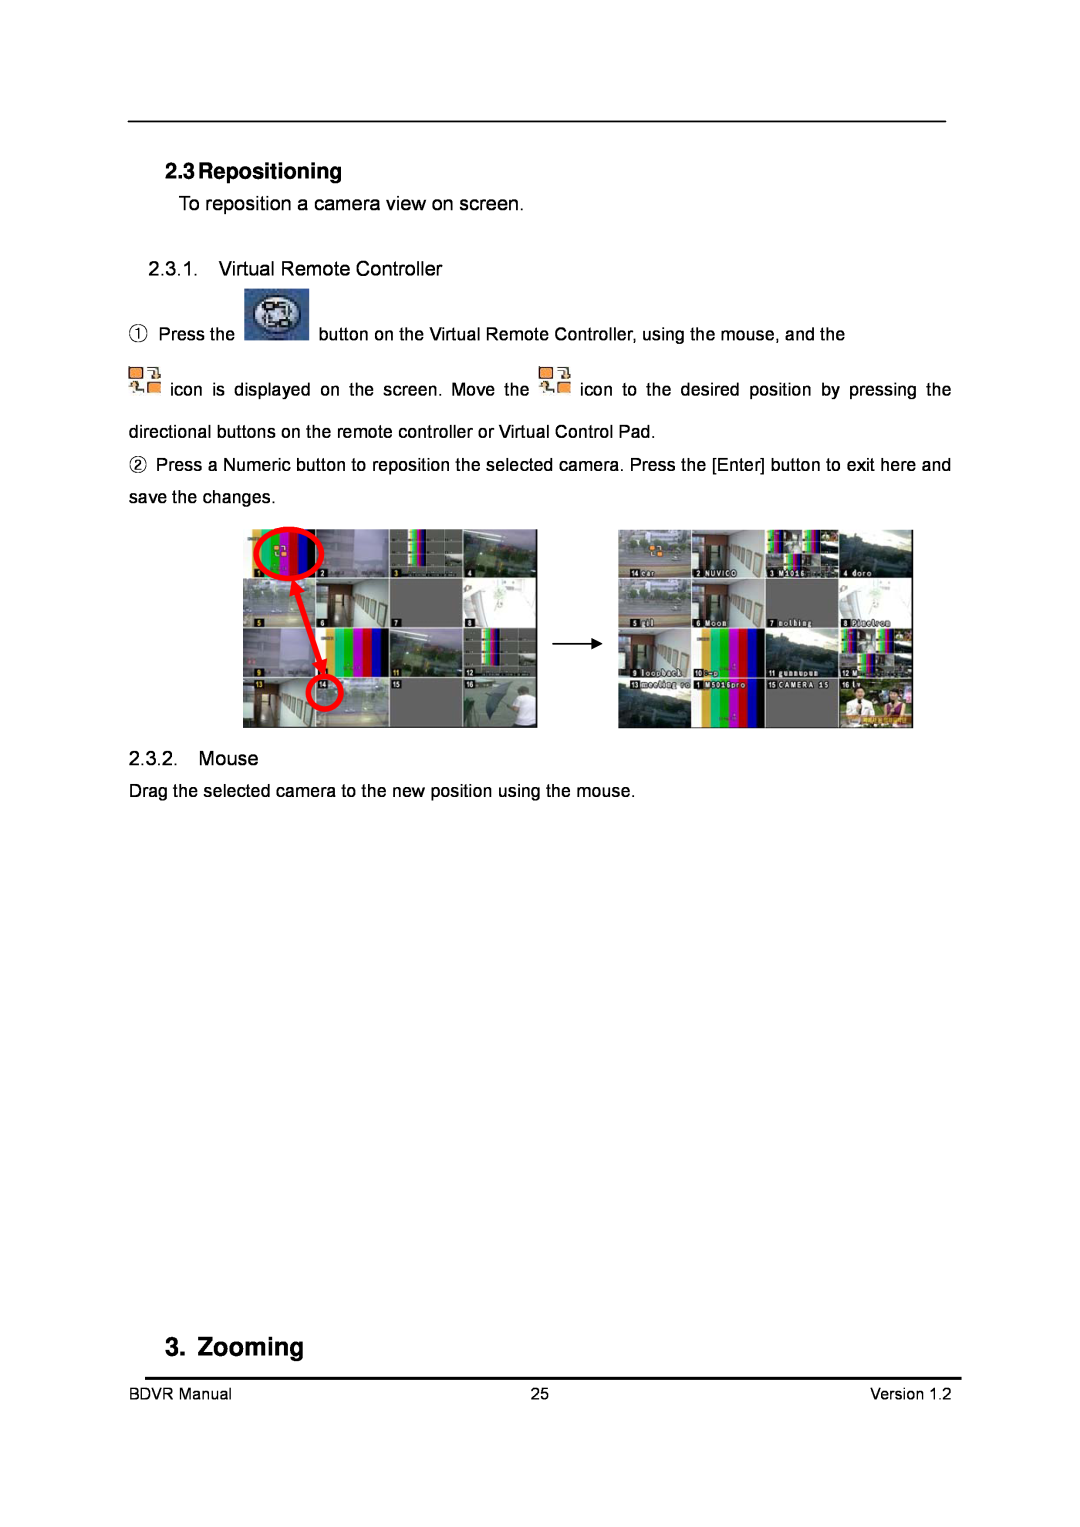 Genie BDVR-4, BDVR-8, BDVR-16 manual Zooming, 2.3Repositioning 